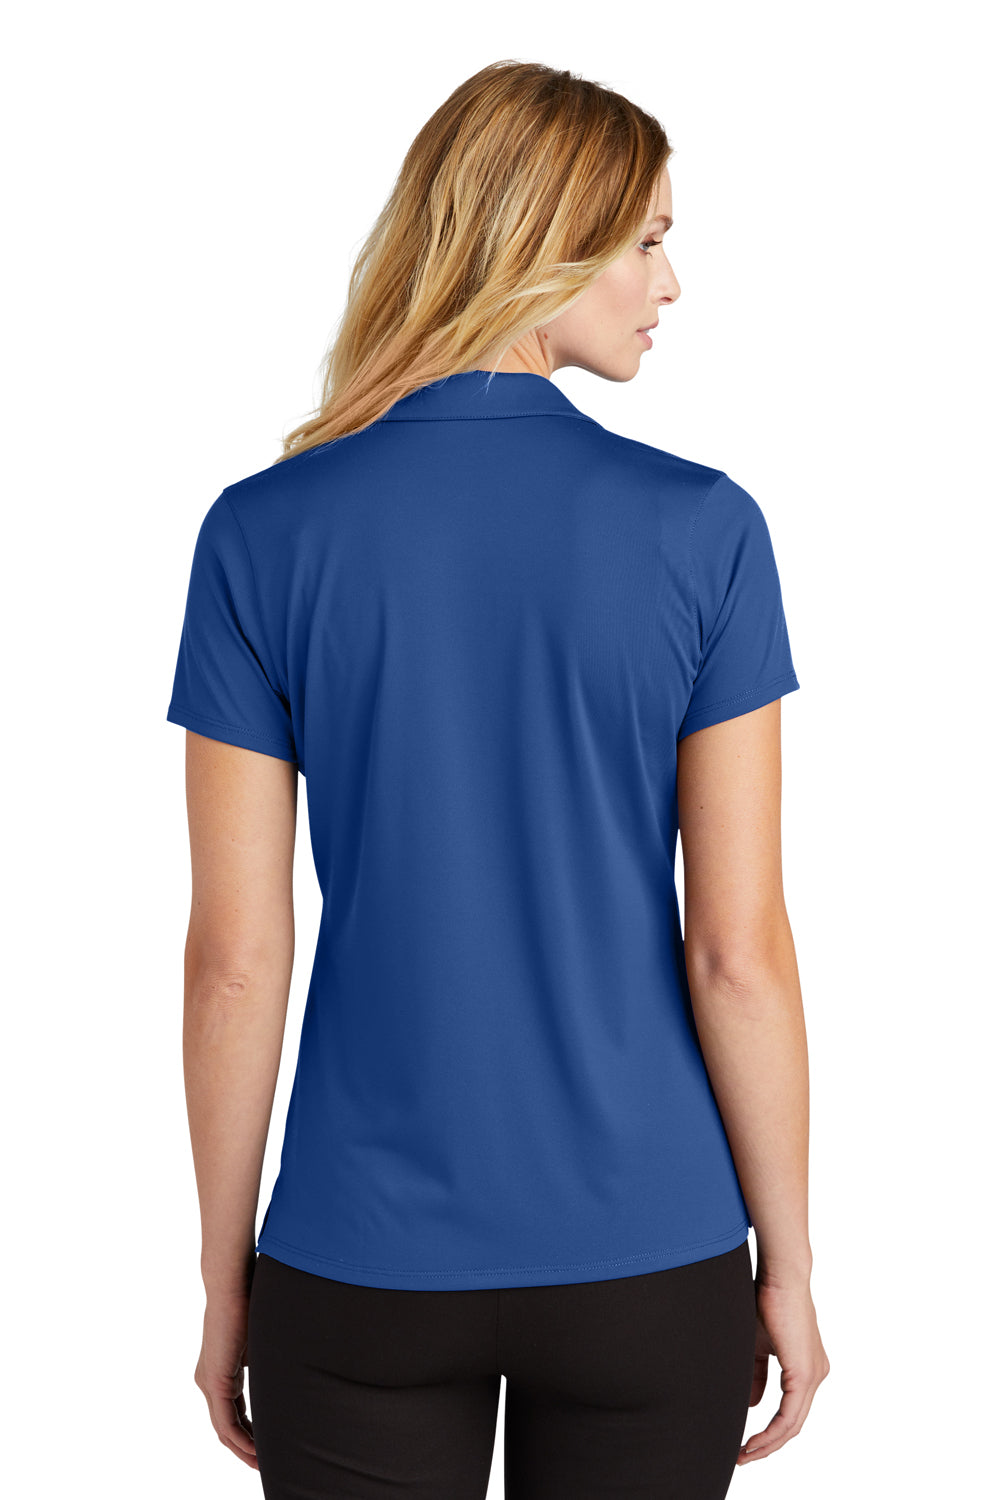 Port Authority LK398 Performance Staff Short Sleeve Polo Shirt True Blue Back